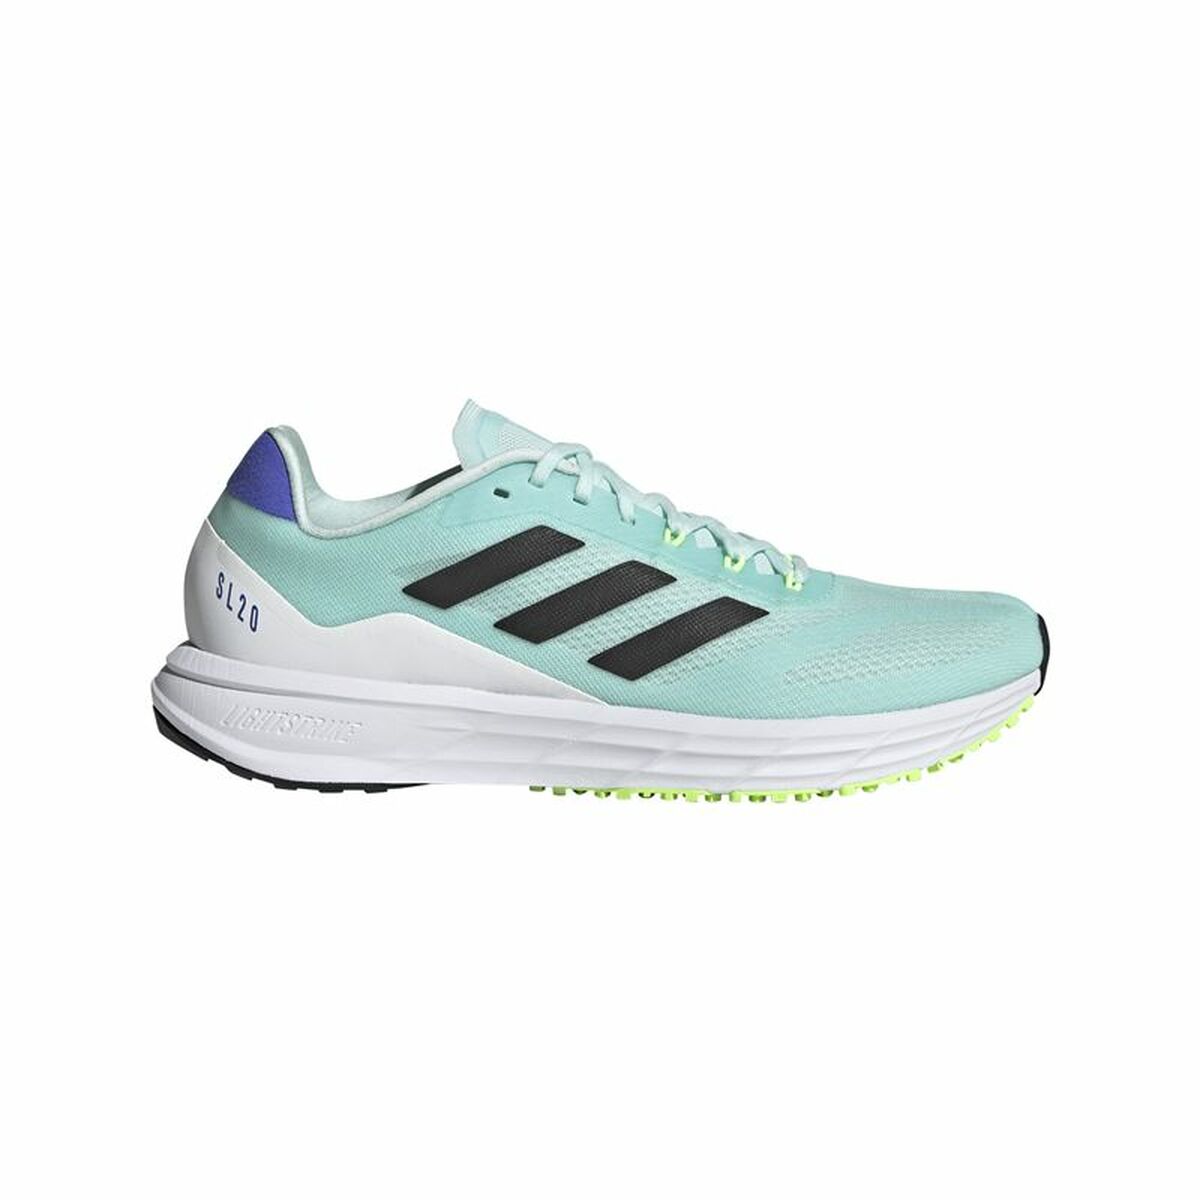 Chaussures de Running pour Adultes Adidas SL20.2 Femme Cyan